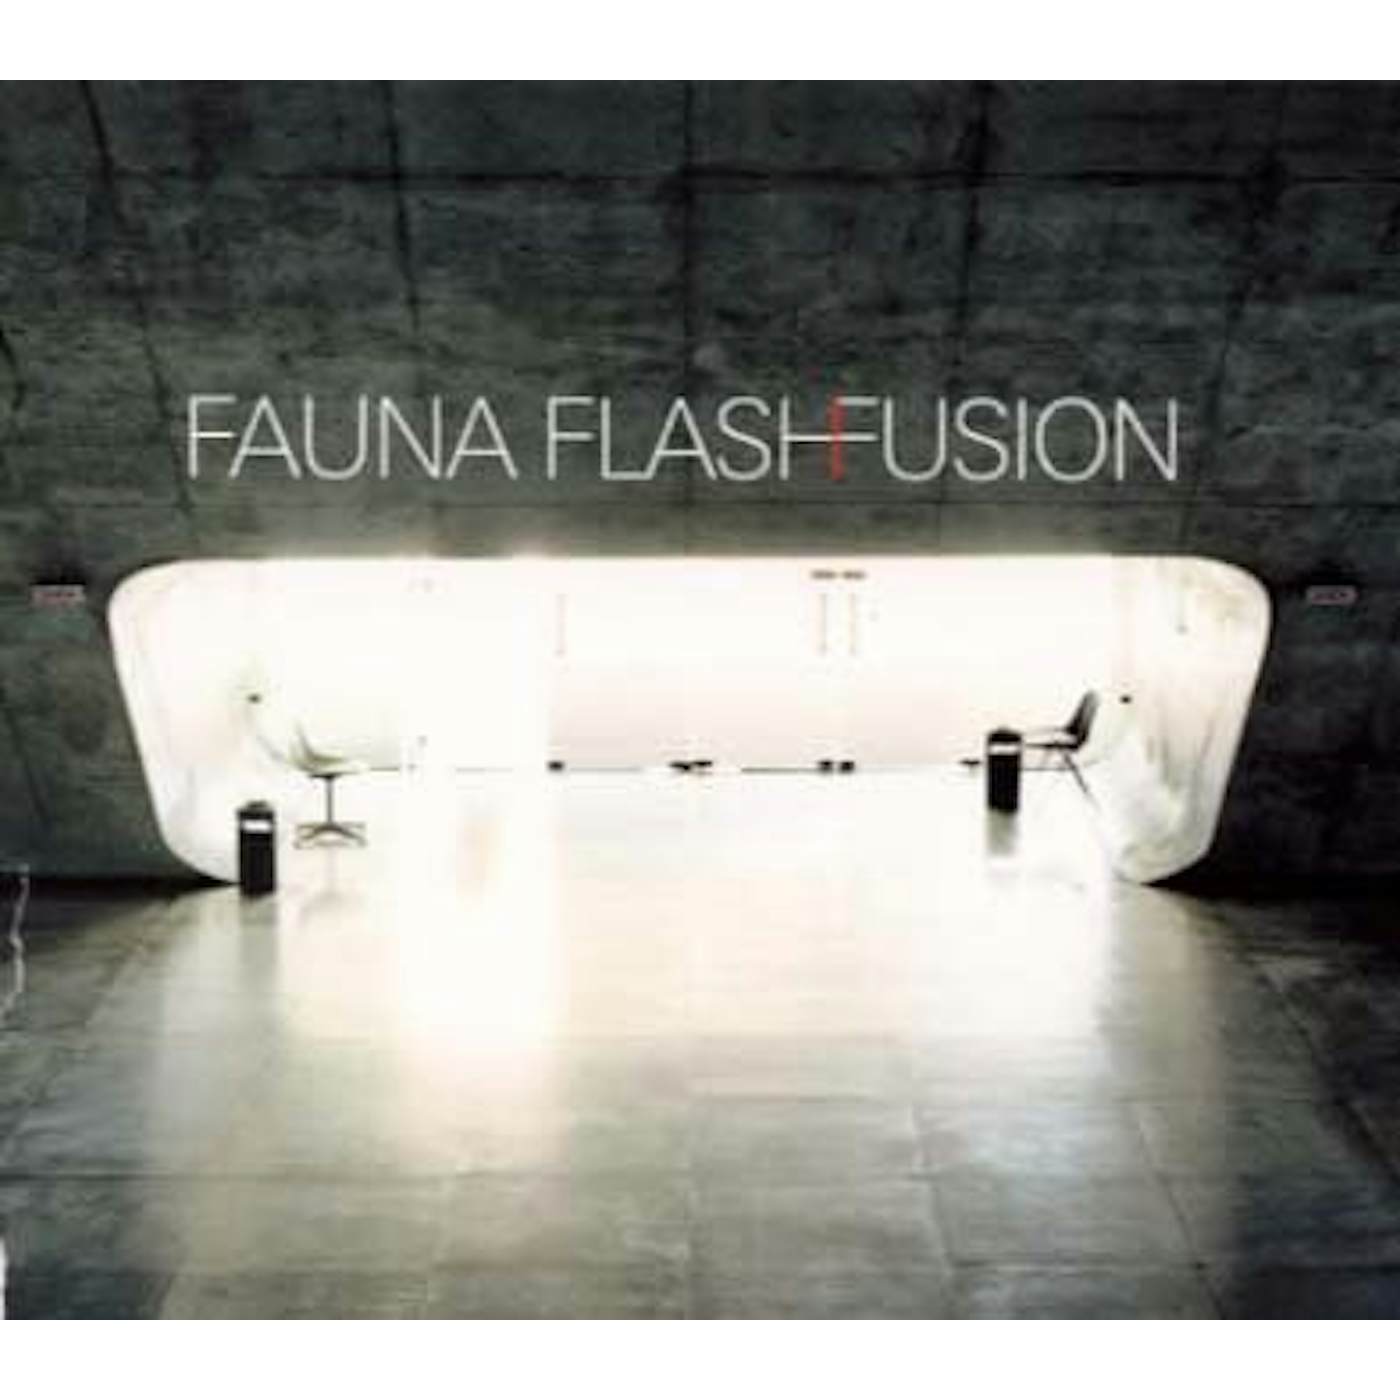 Fauna Flash FUSION CD